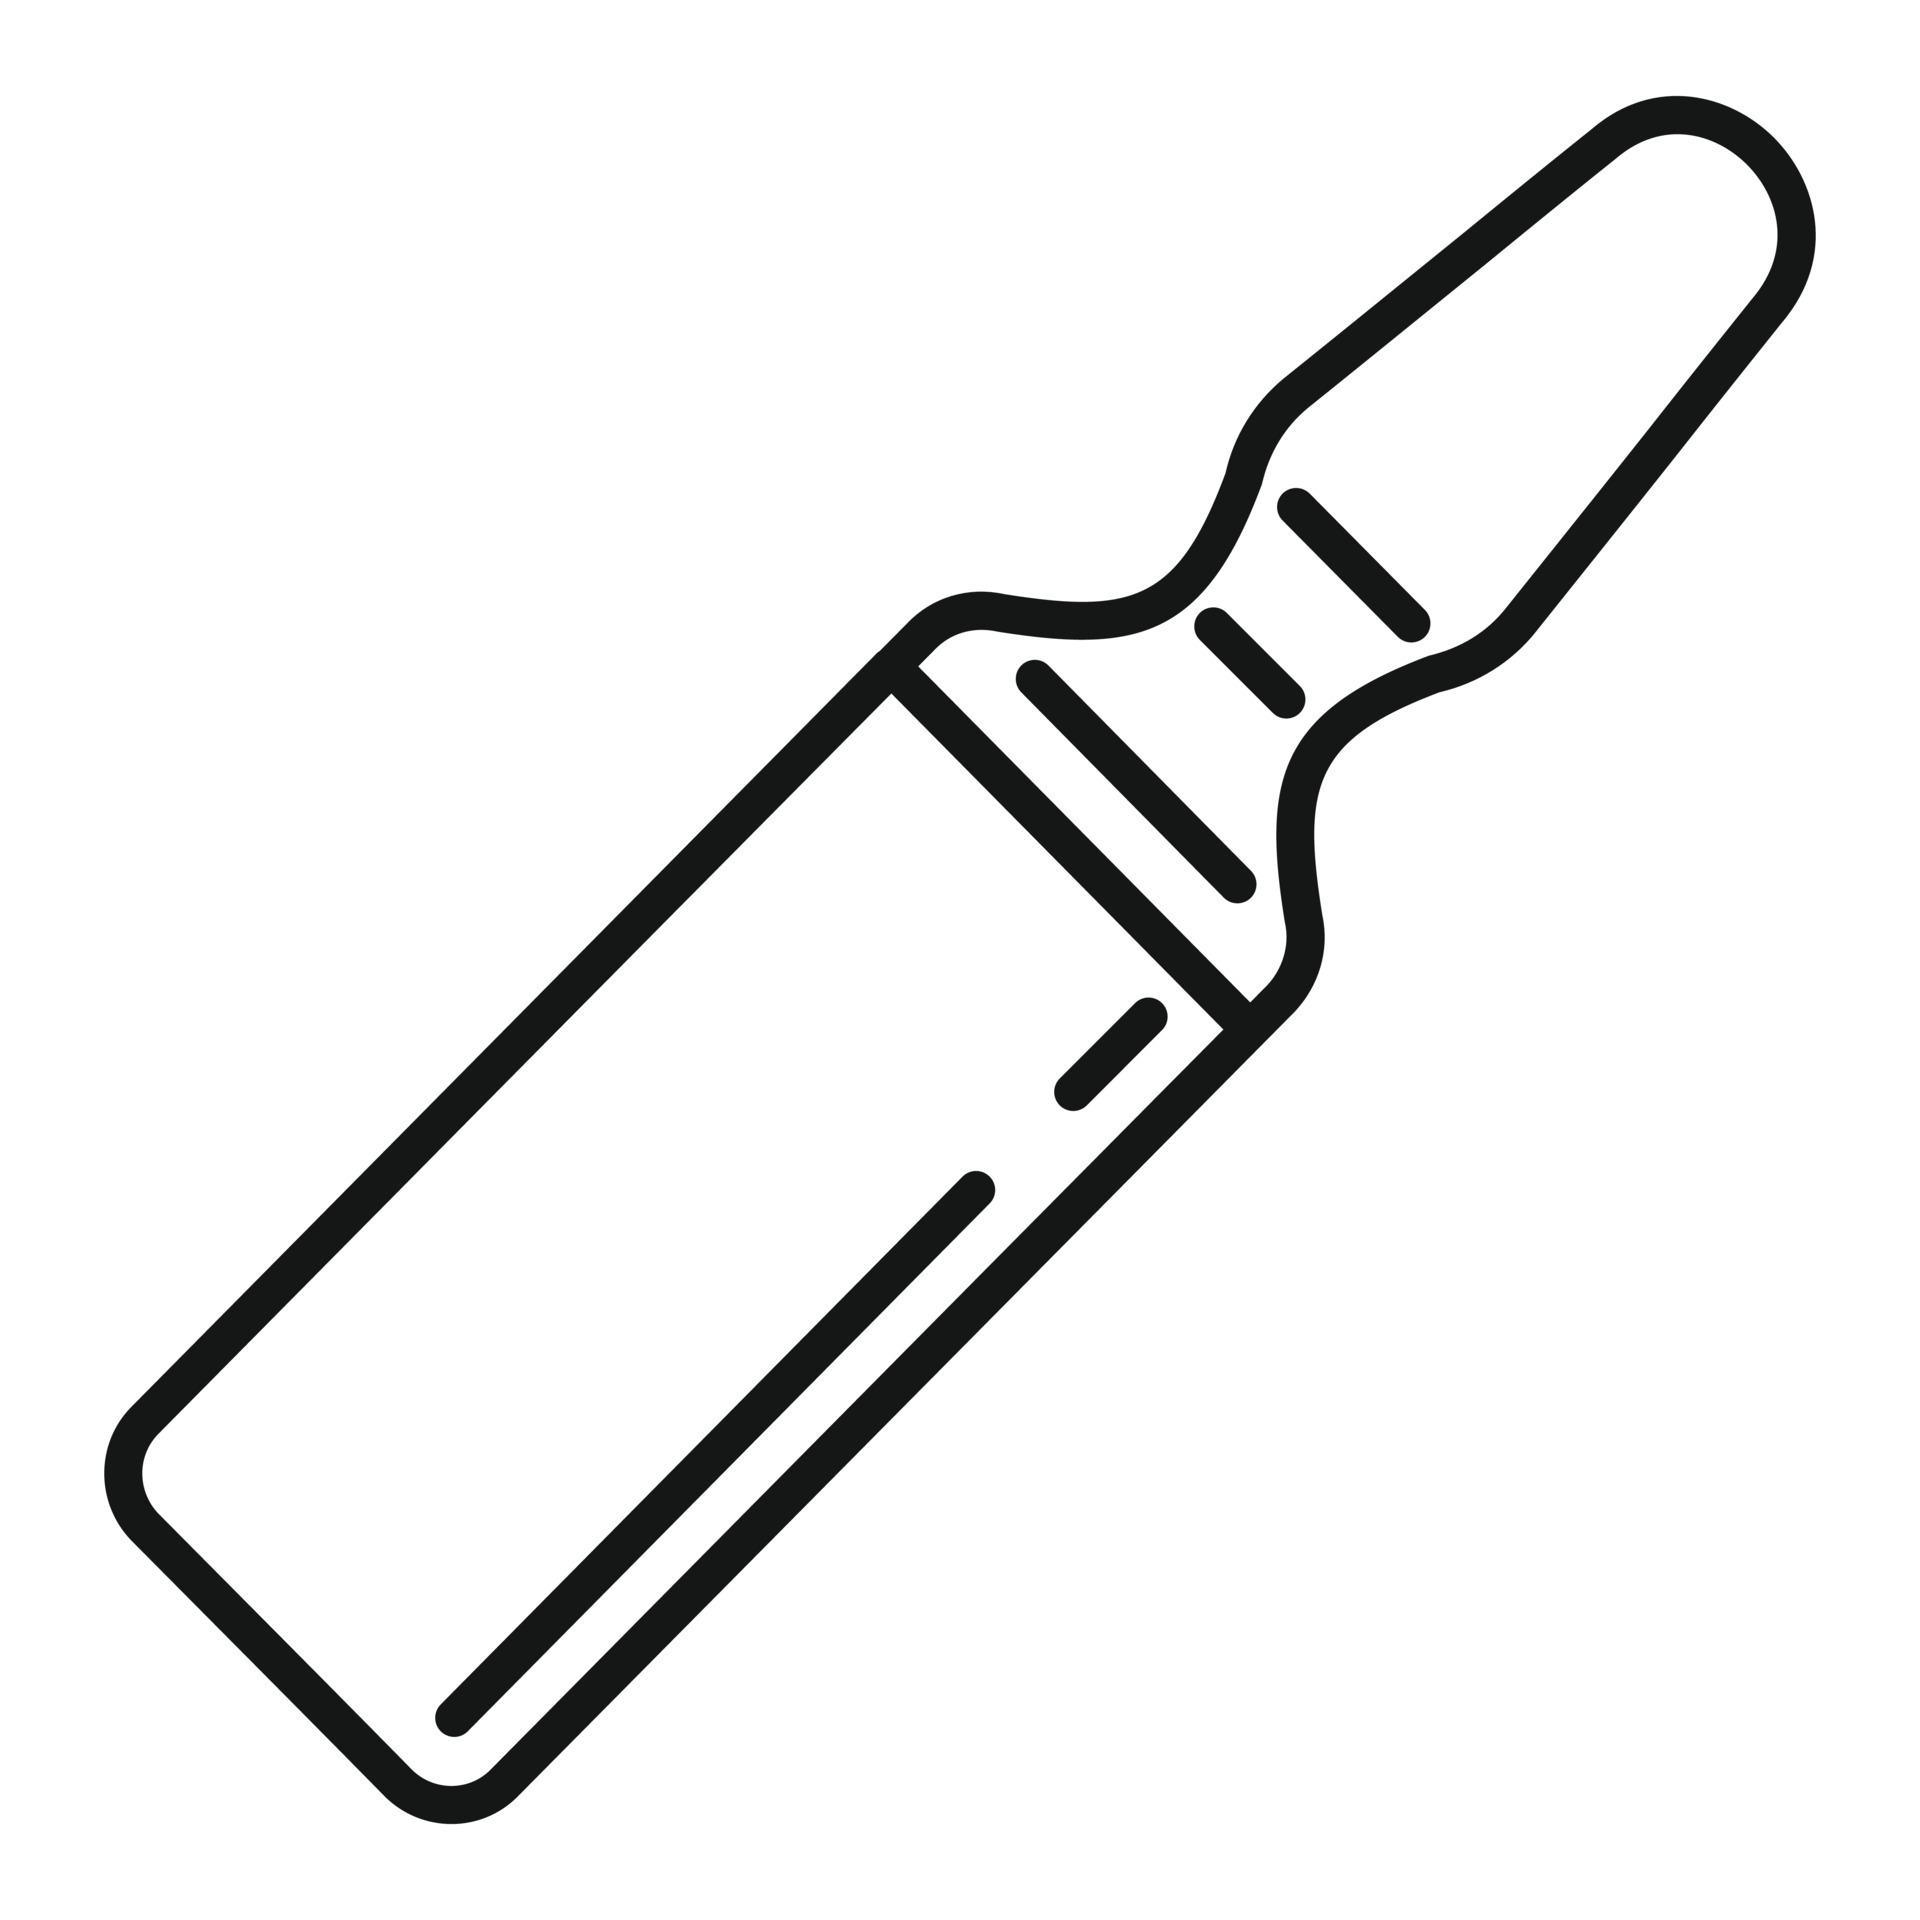 Estilo de esboço doodle de ampola de medicamento ícone de ampola